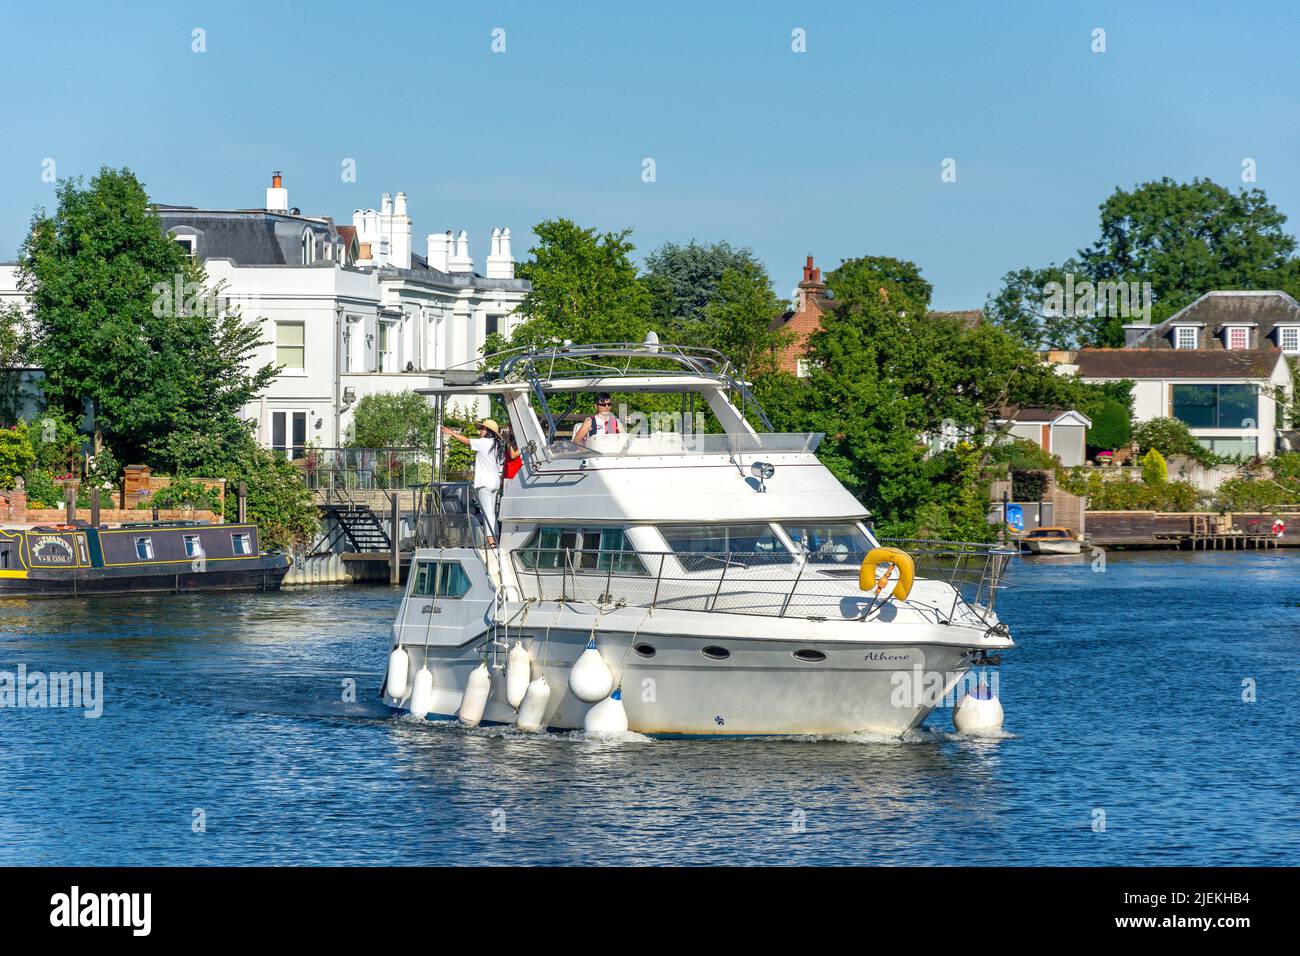 Leisure boat on River Thames, Shepperton, Surrey, England, United Kingdom Stock Photo